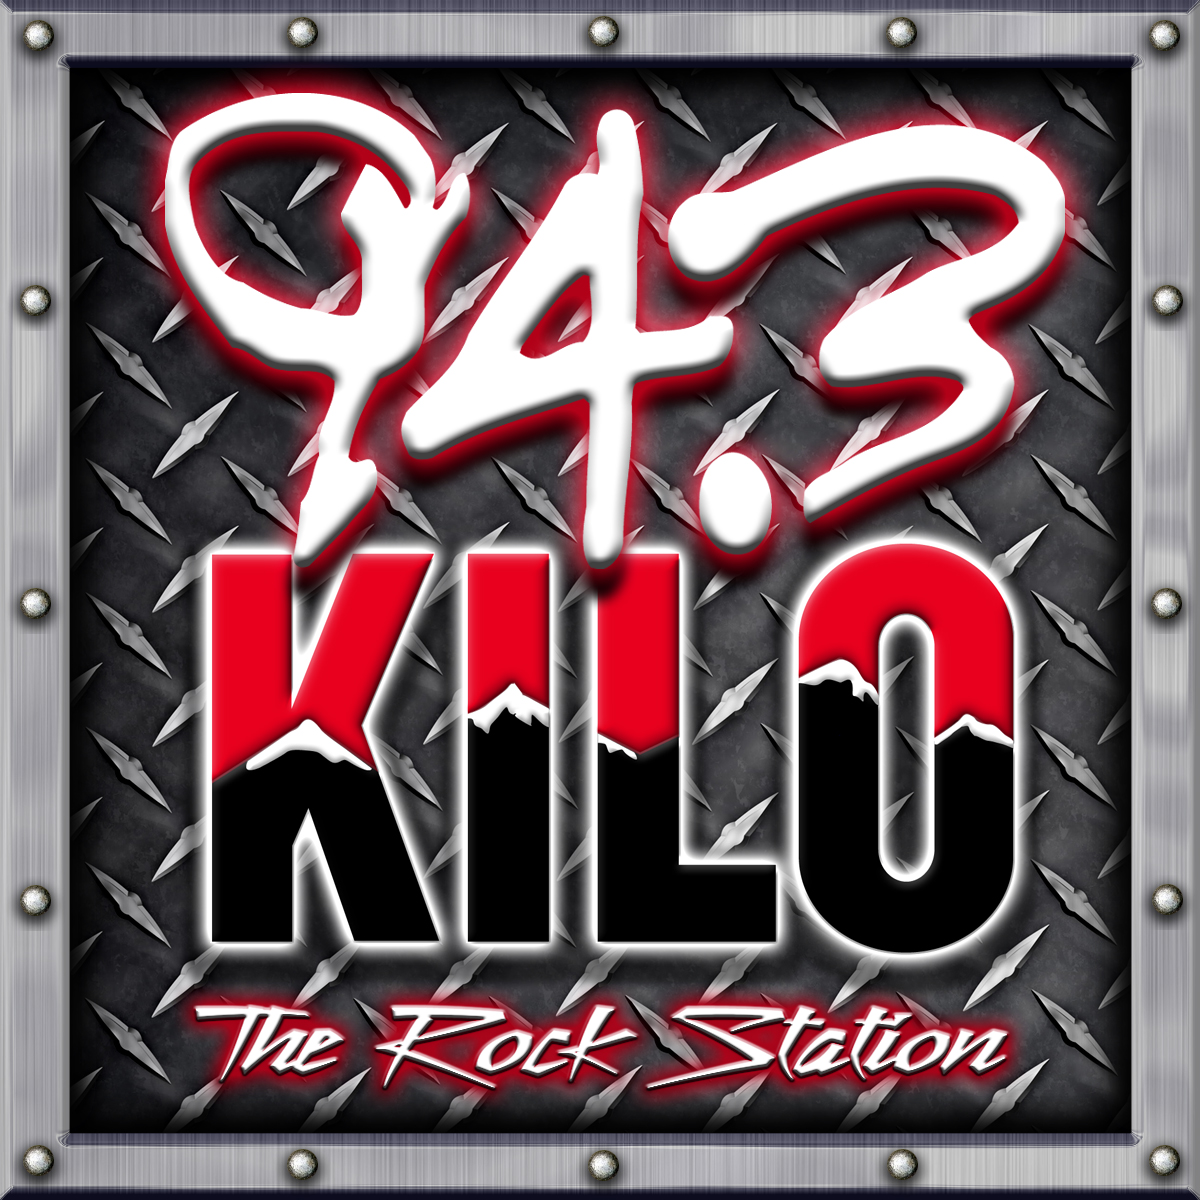 Stream Kilo - Head Banger Mix by Kilo